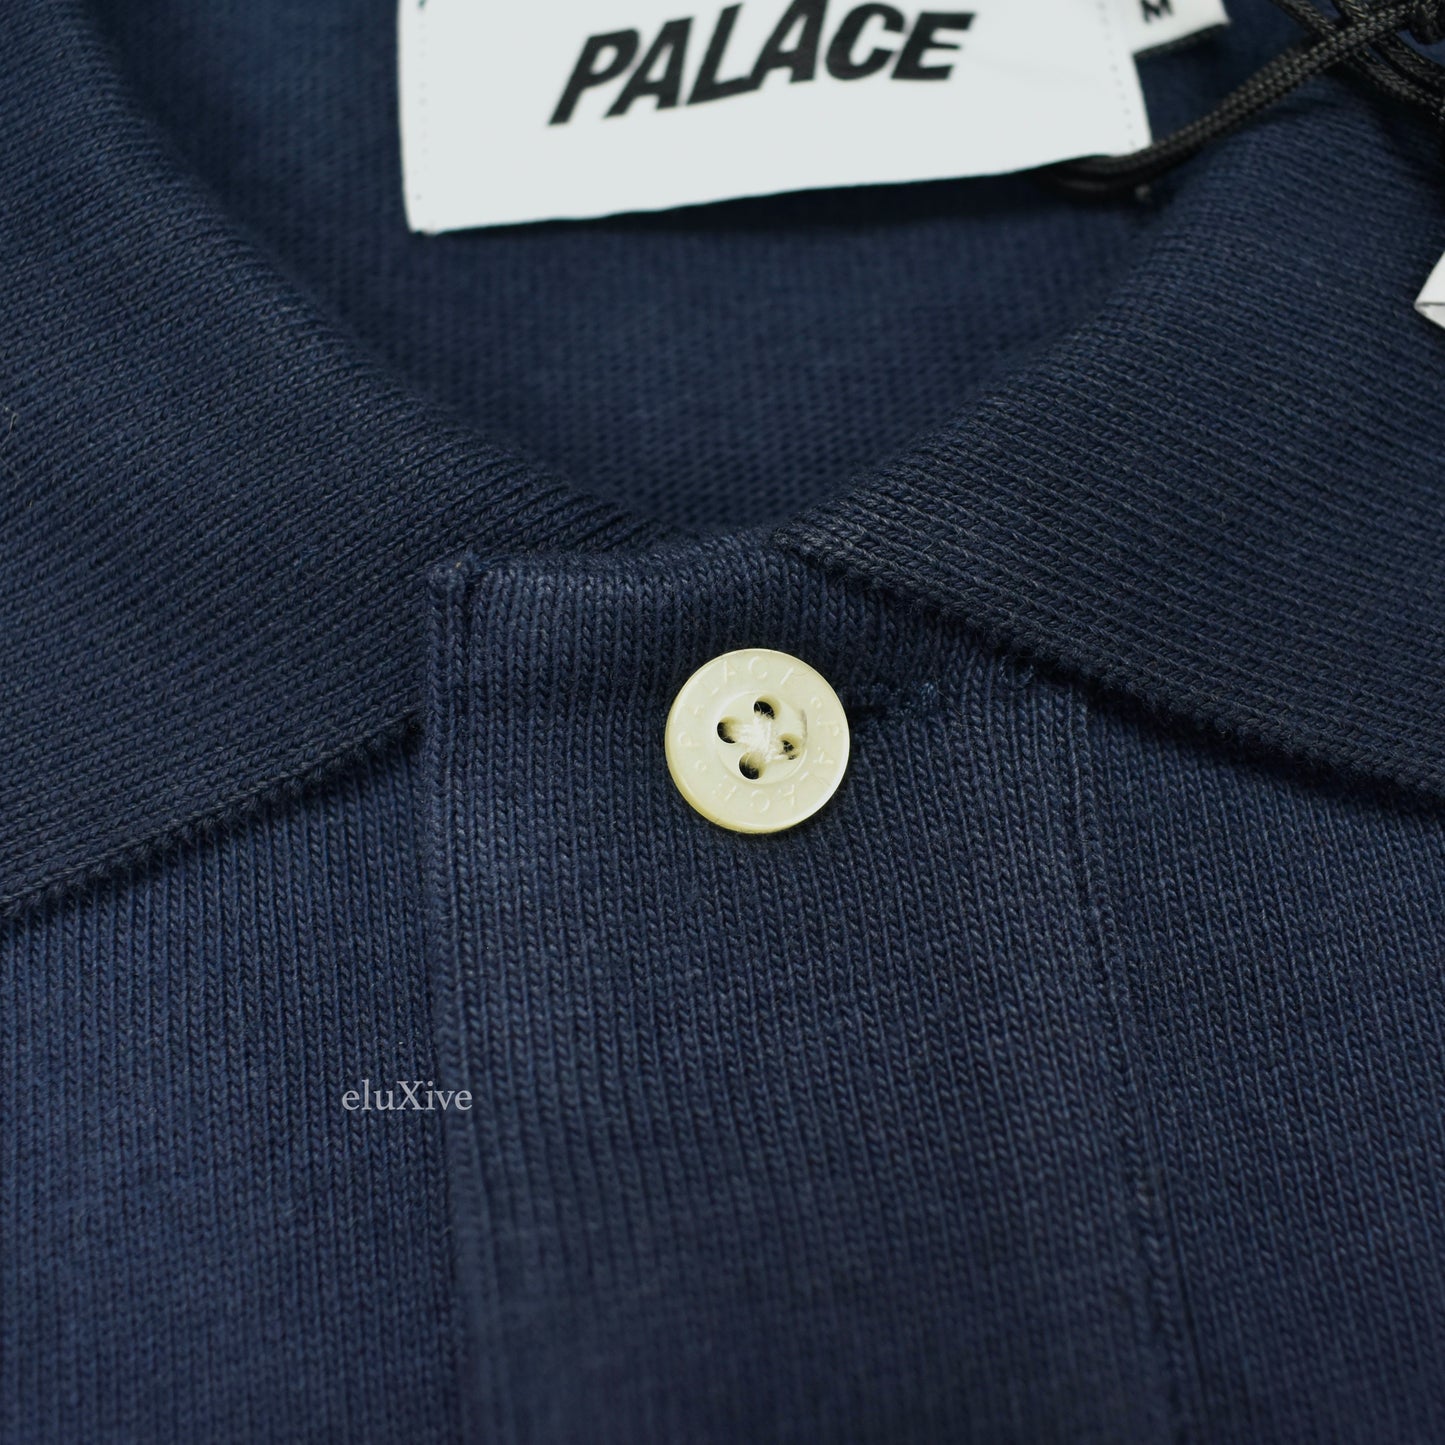 Palace - P-Logo Embroidered Animals Polo Shirt (Navy)